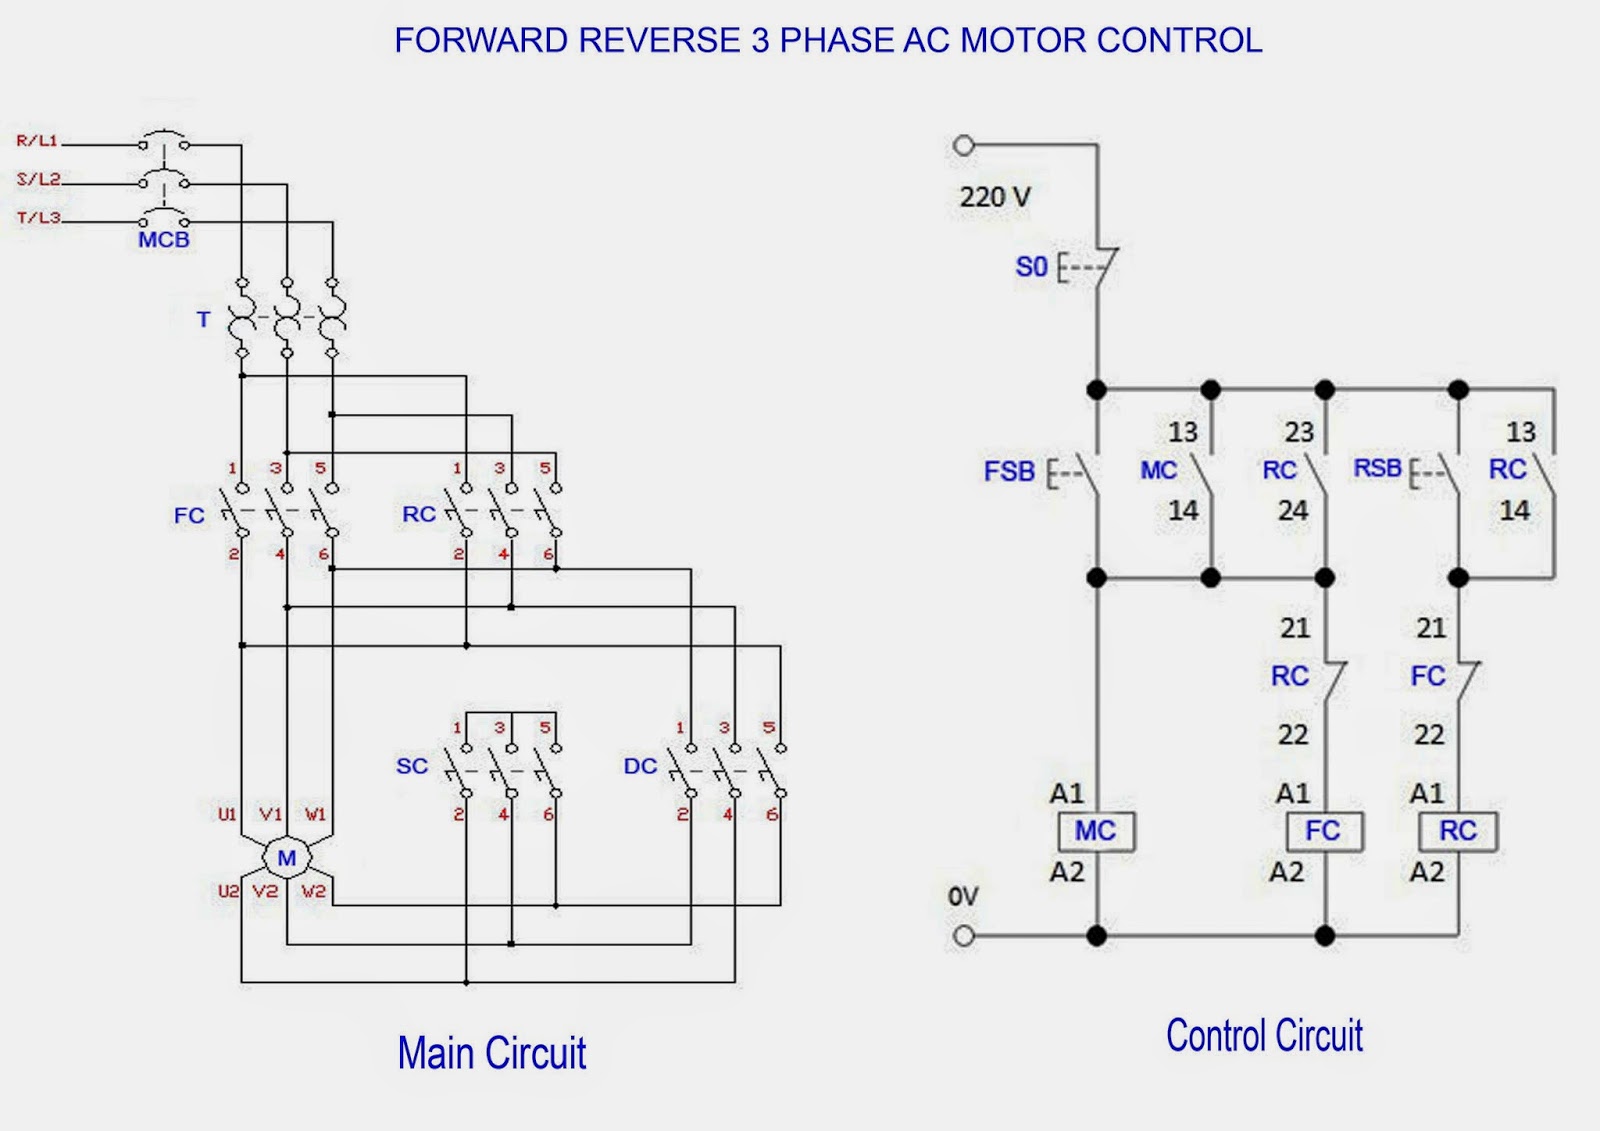 Forward Reverse 3 Phase AC Motor Control Wiring Diagram ...